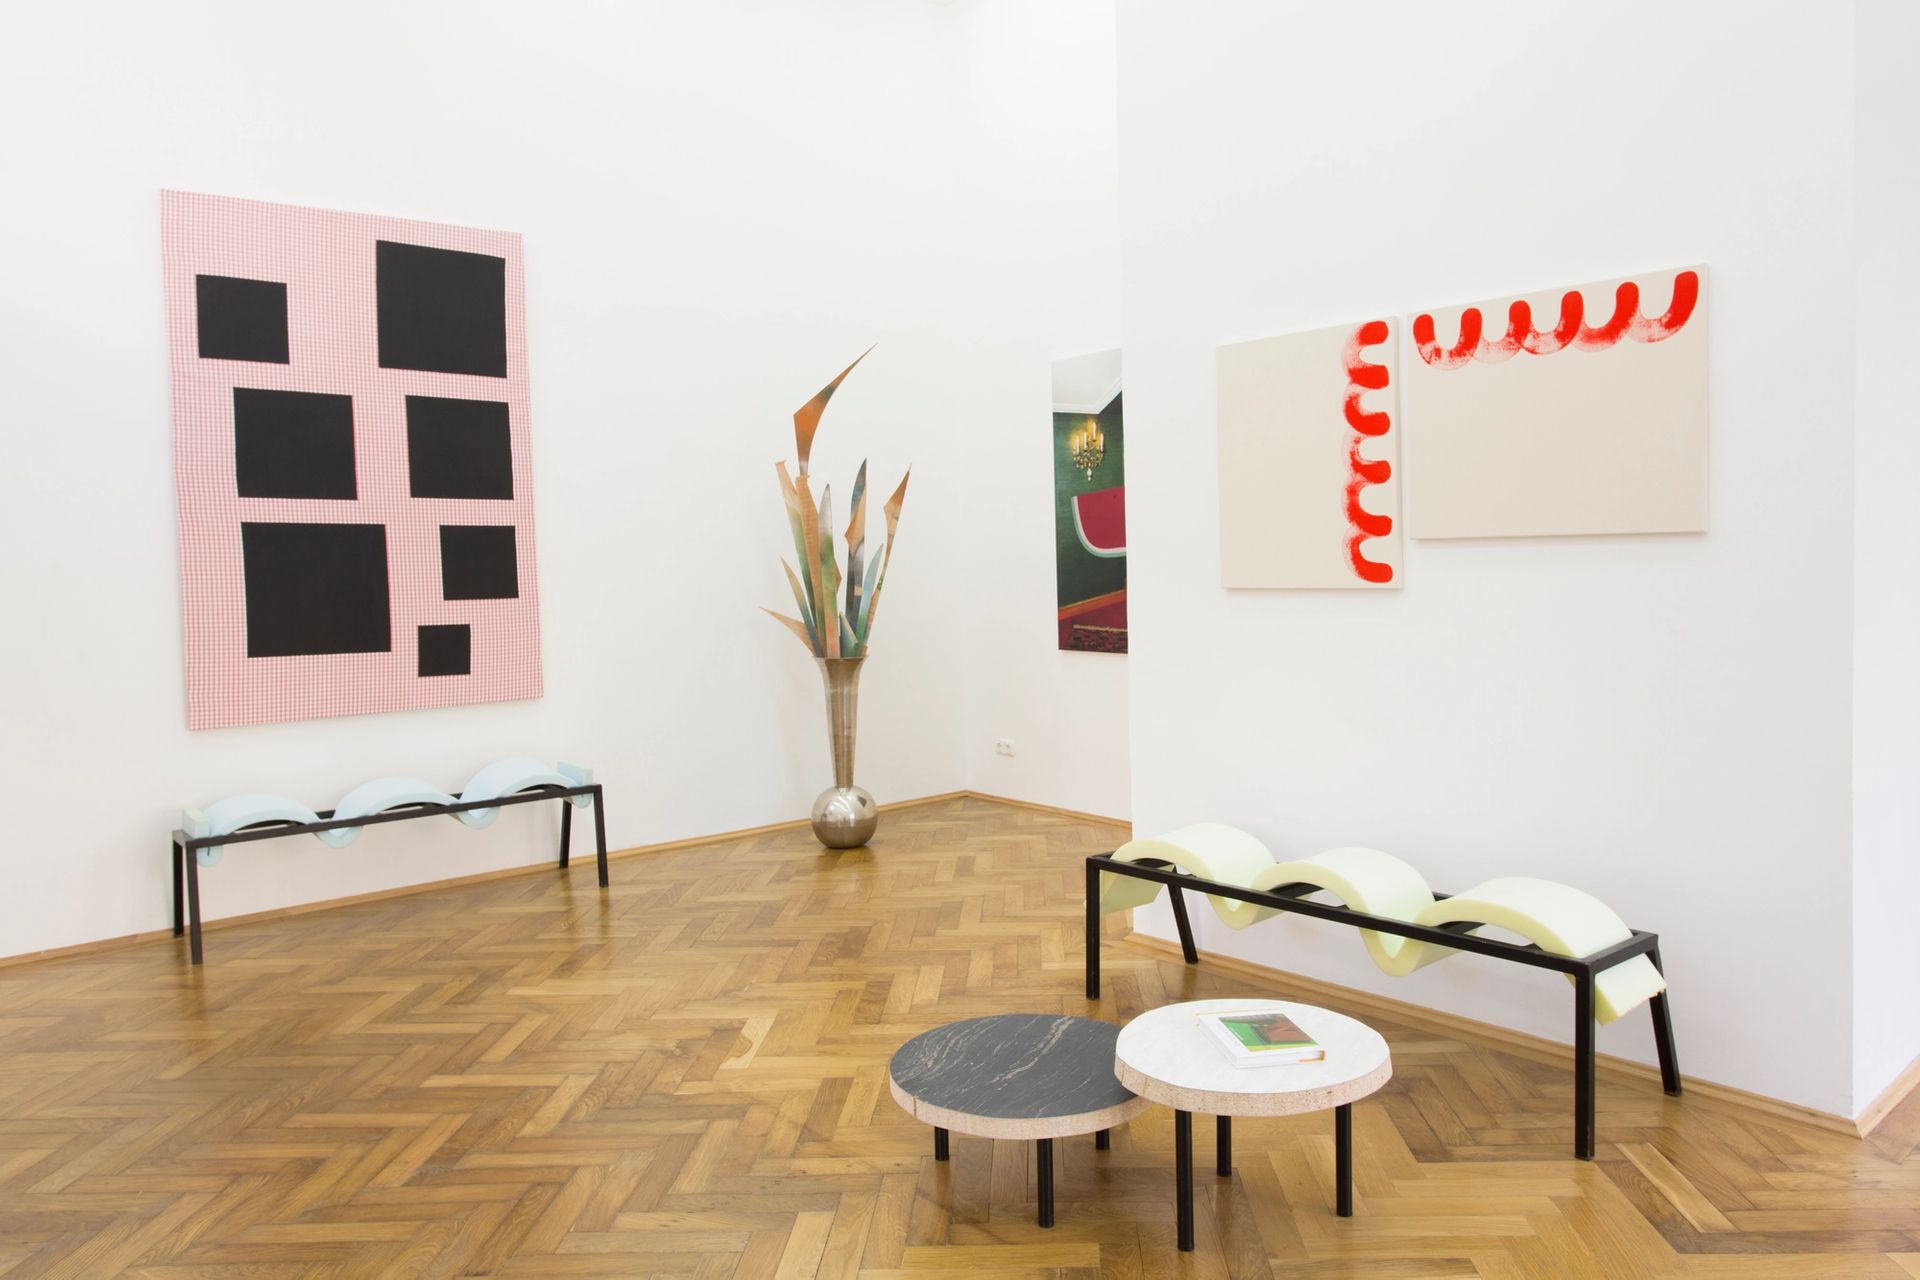 Installation view: Elvire Bonduelle, “waiting room #4”, 2015 (Nicolas Chardon, Émile Vappereau, Amedeo Polazzo, Elvire Bonduelle)